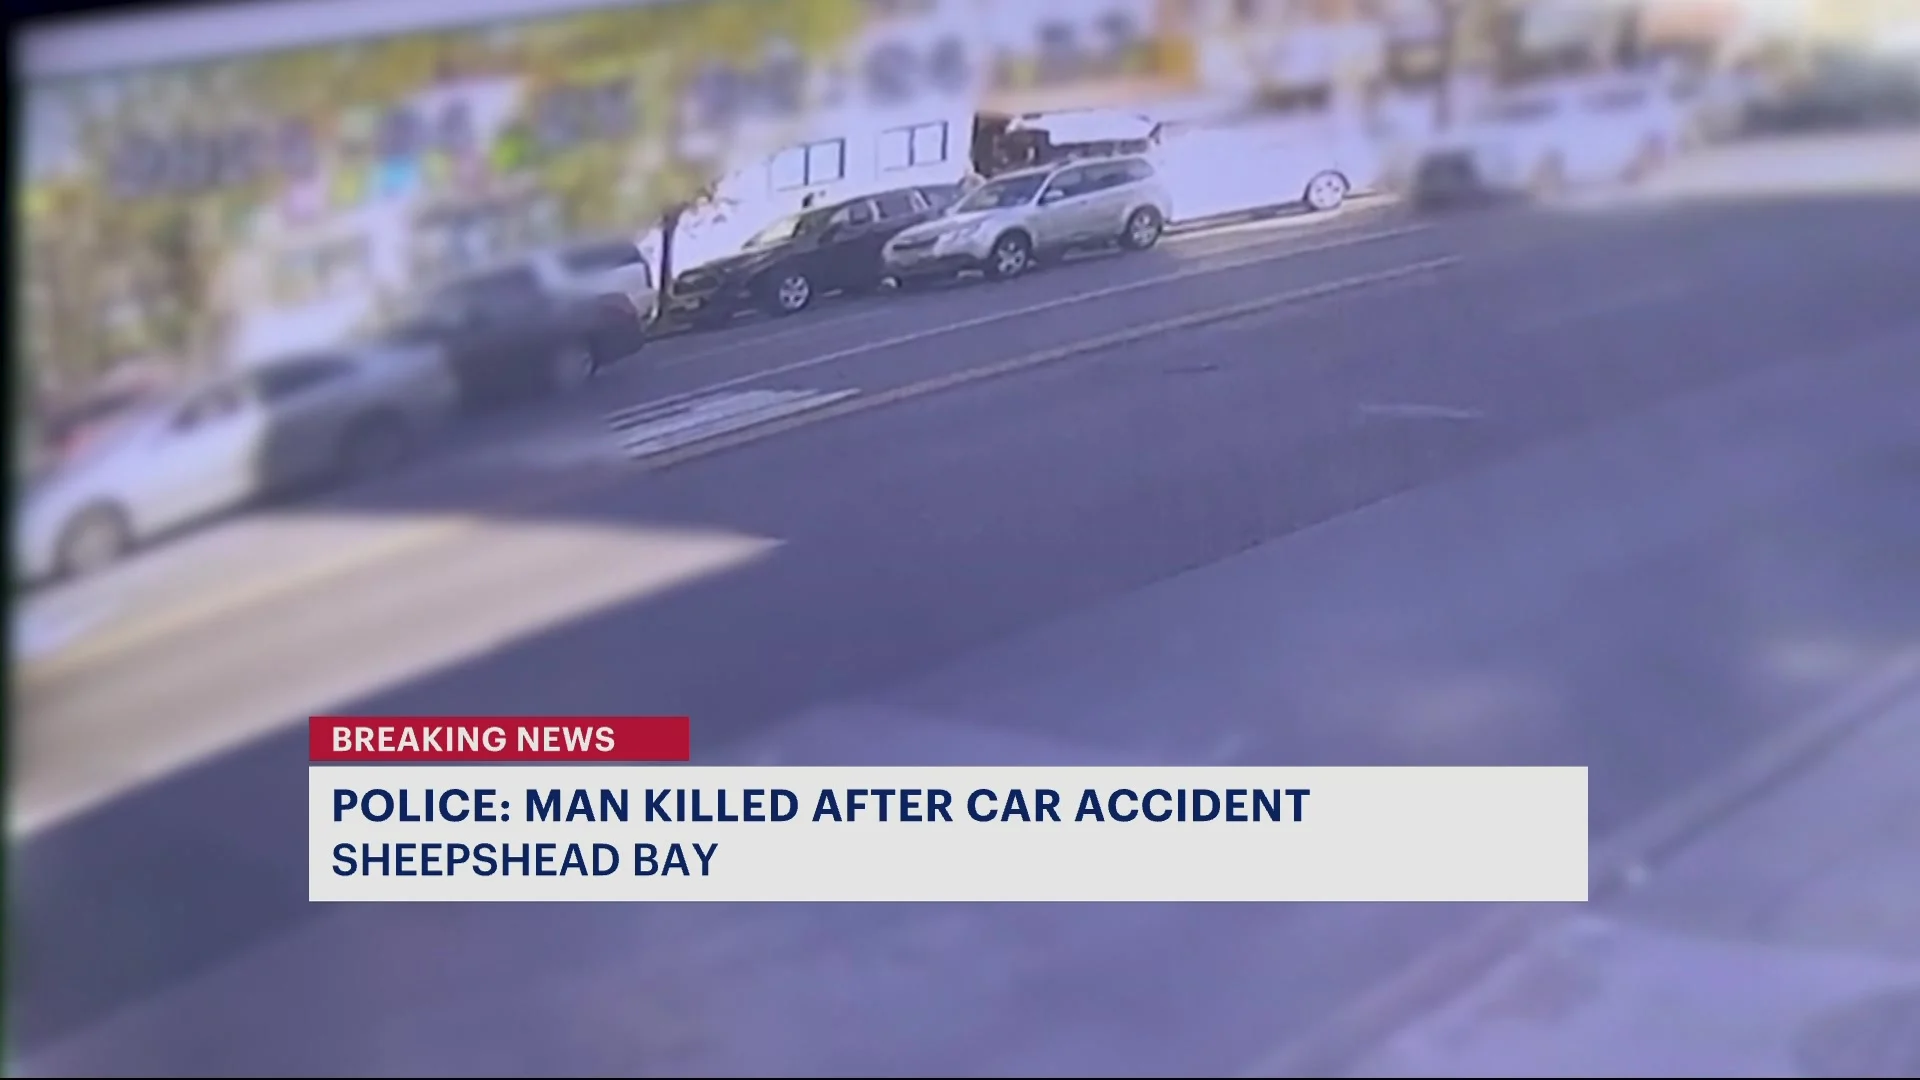 Police: Apparent car accident kills 77-year-old Sheepshead Bay man – News 12 Brooklyn